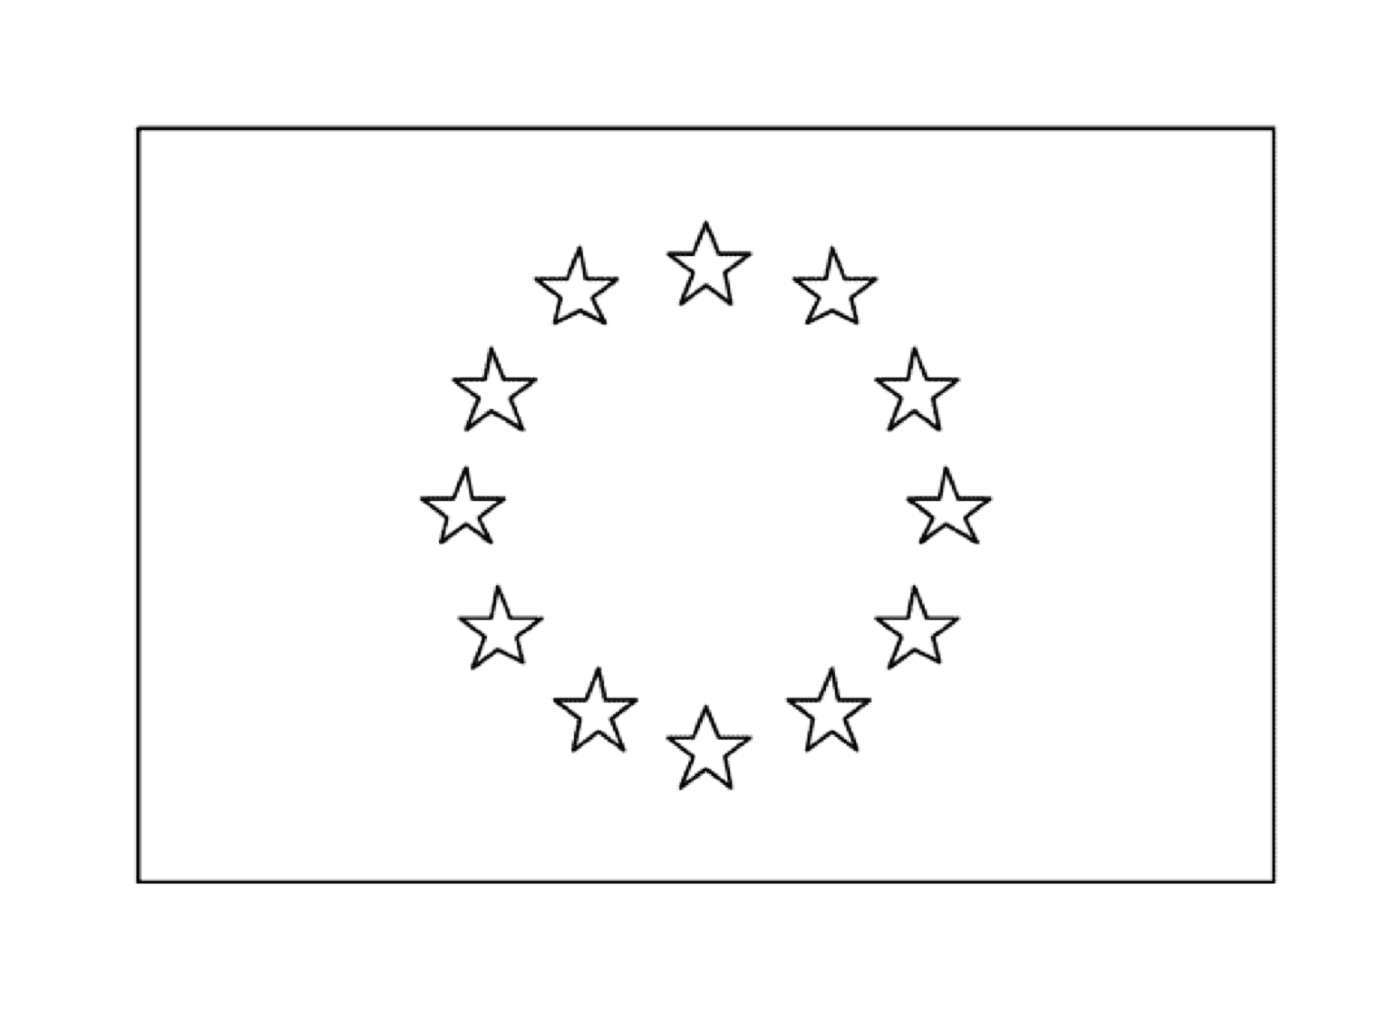  Uma bandeira europeia 